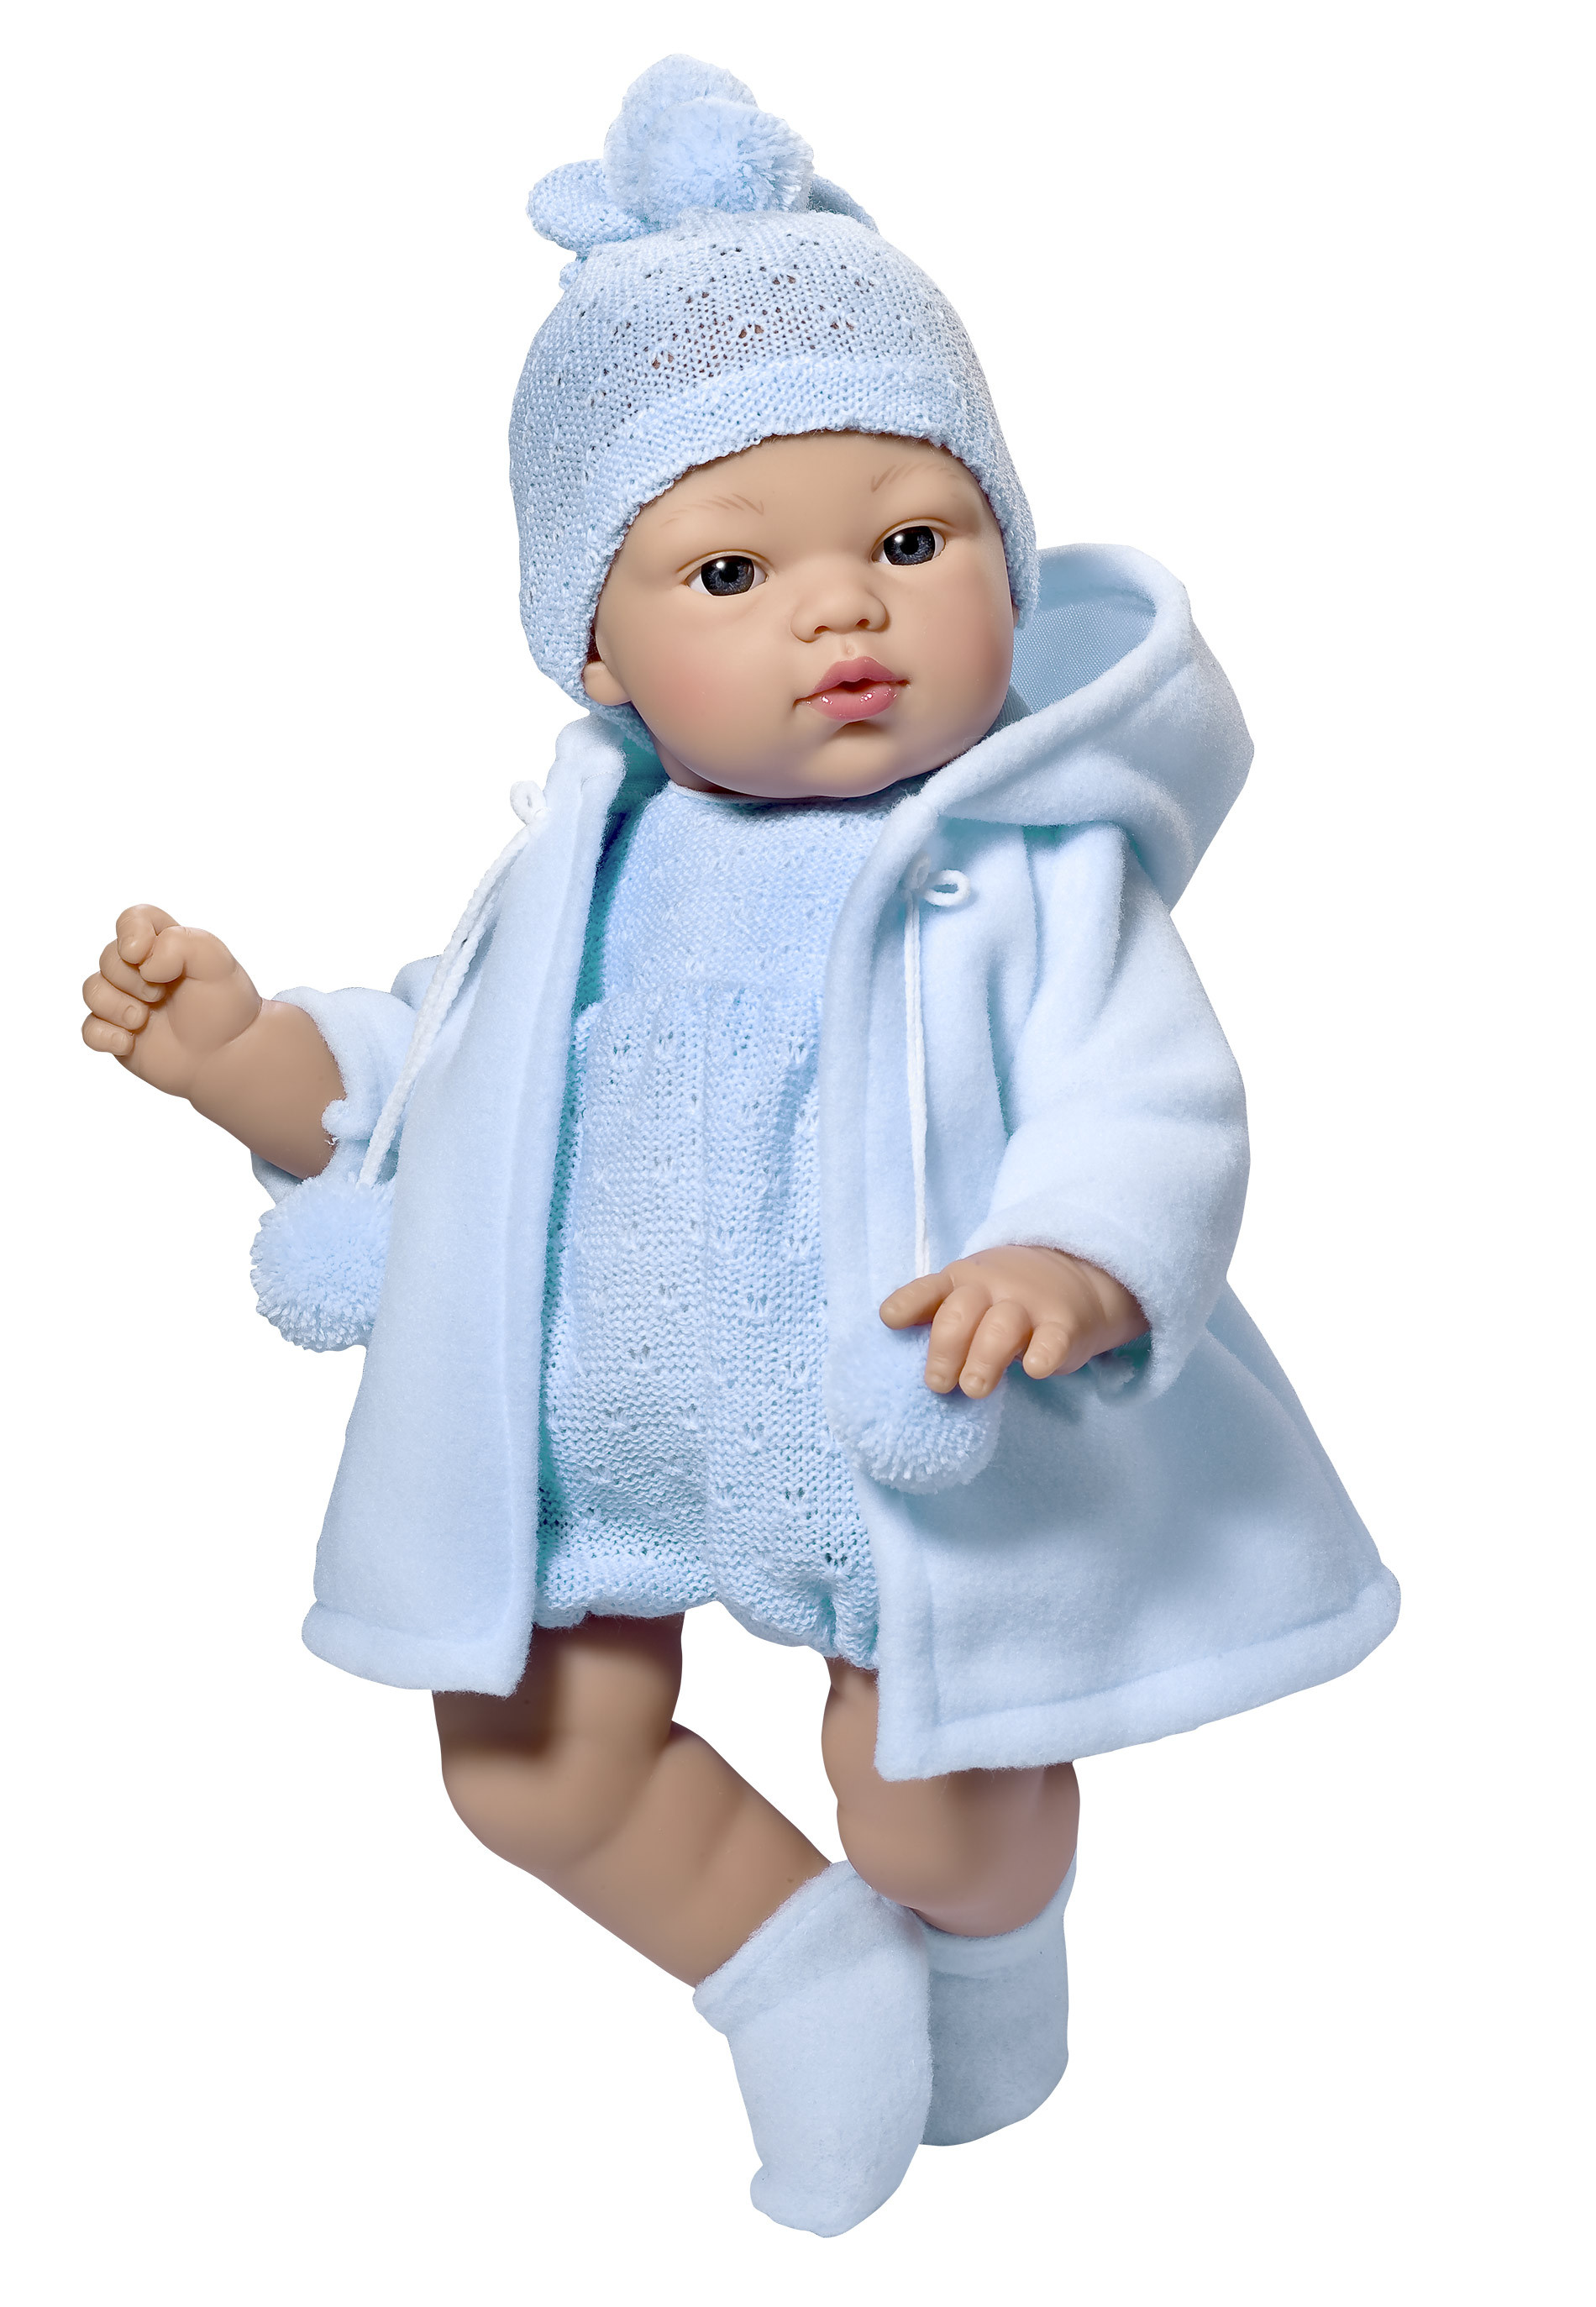 Realistic Koke baby boy doll